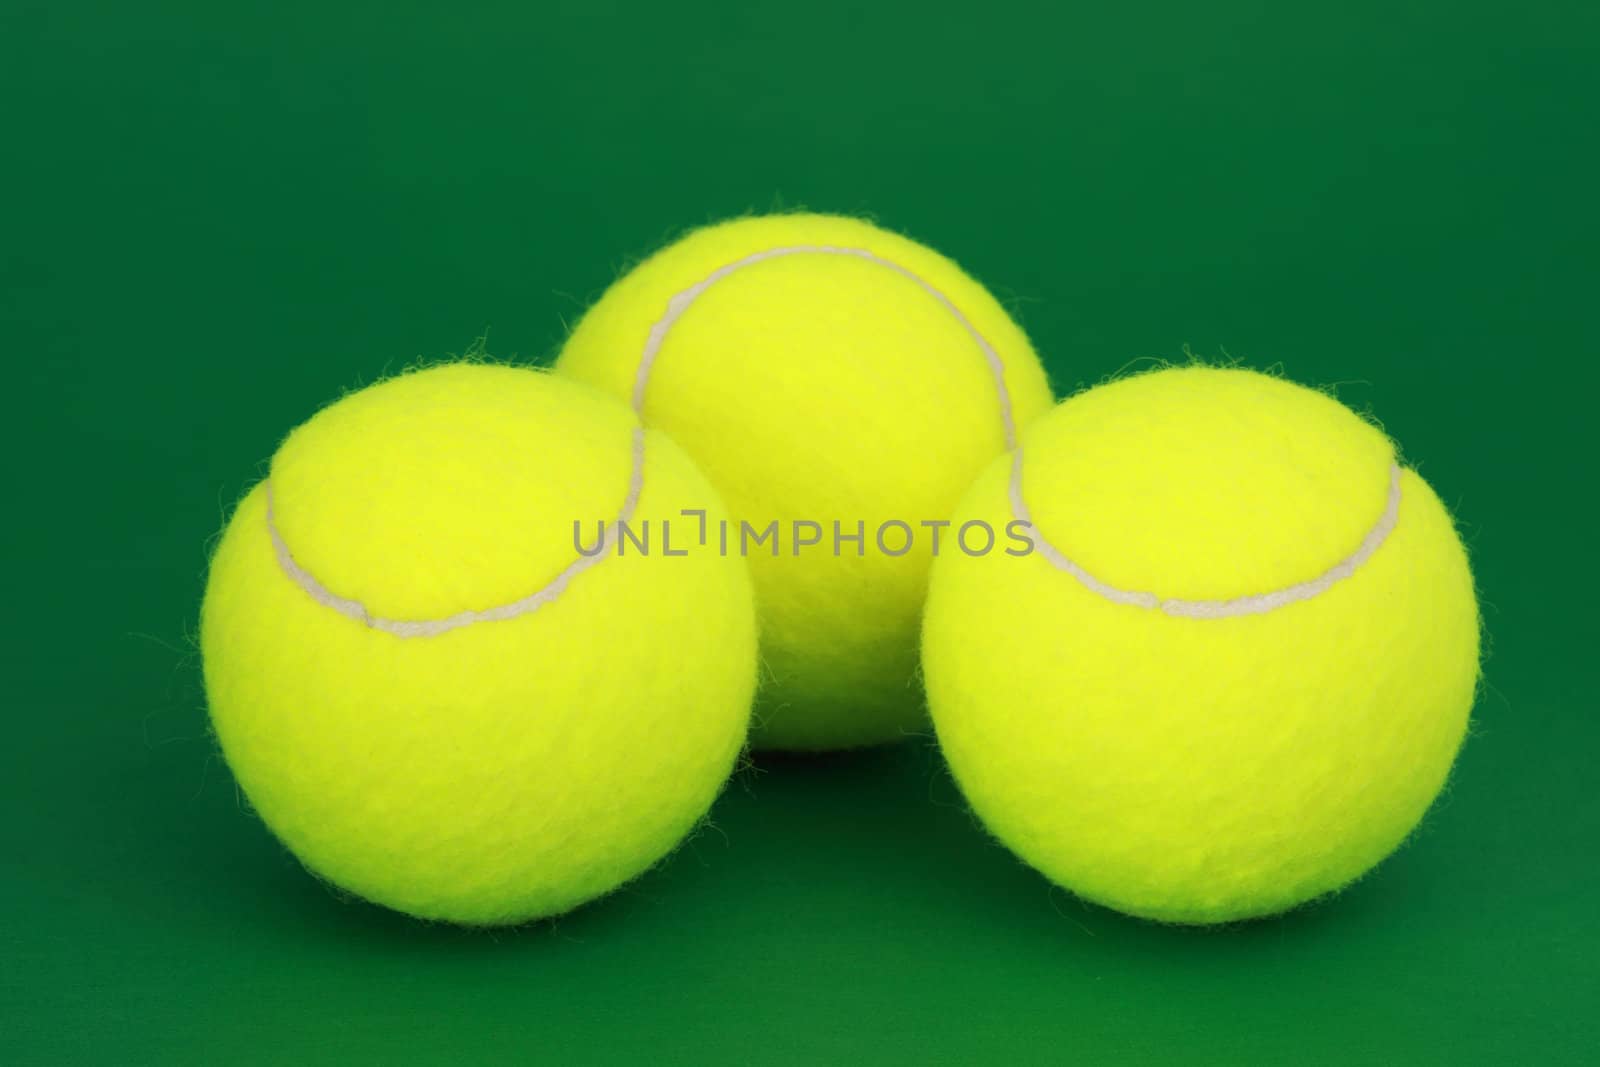 tennis balls by lanalanglois